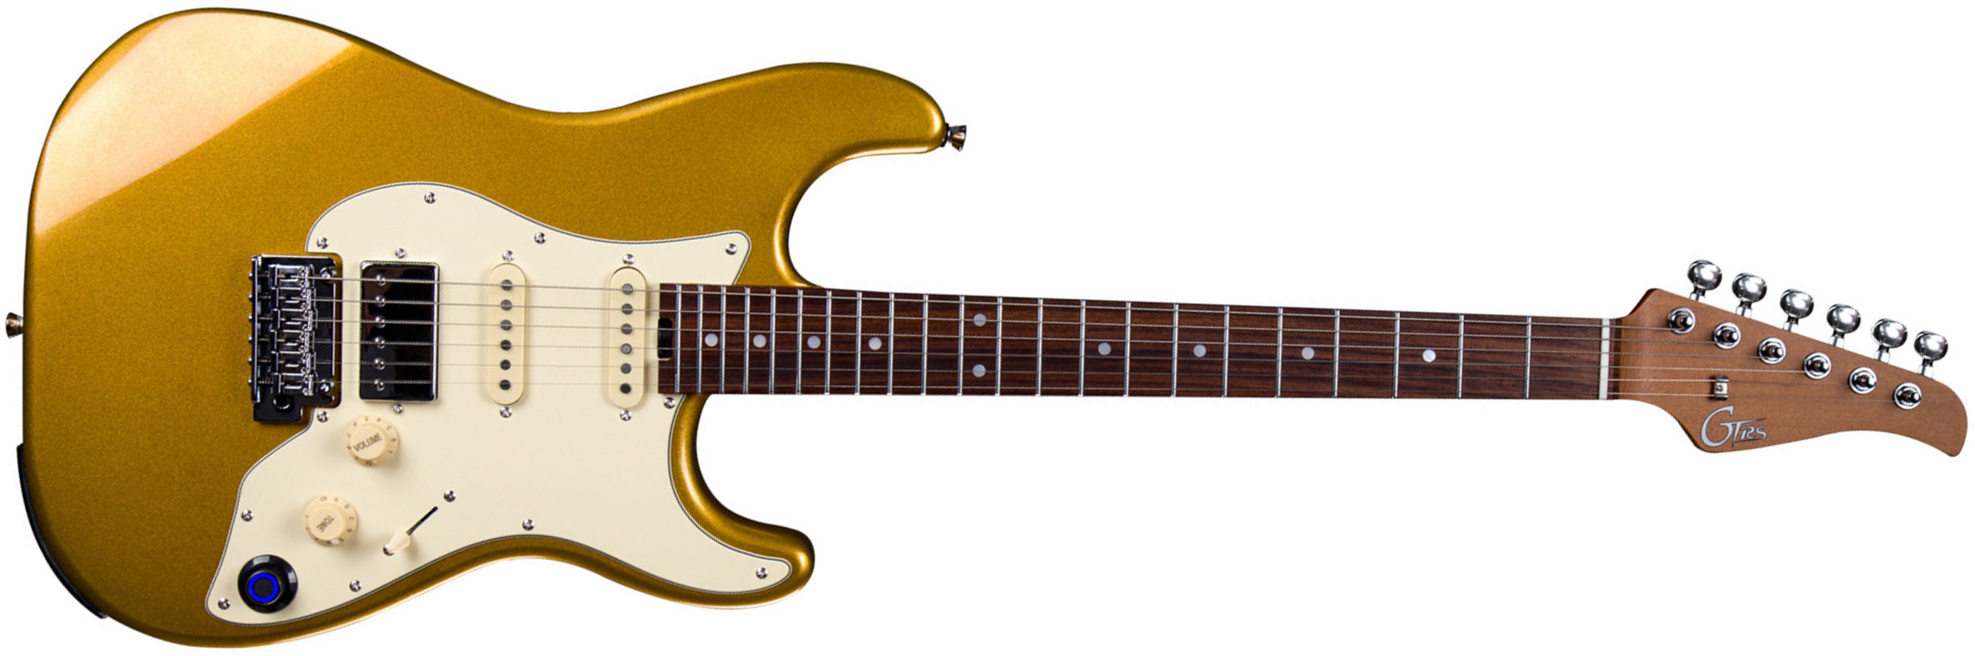 Mooer Gtrs S800 Hss Trem Rw - Gold - MIDI / Digital elektrische gitaar - Main picture